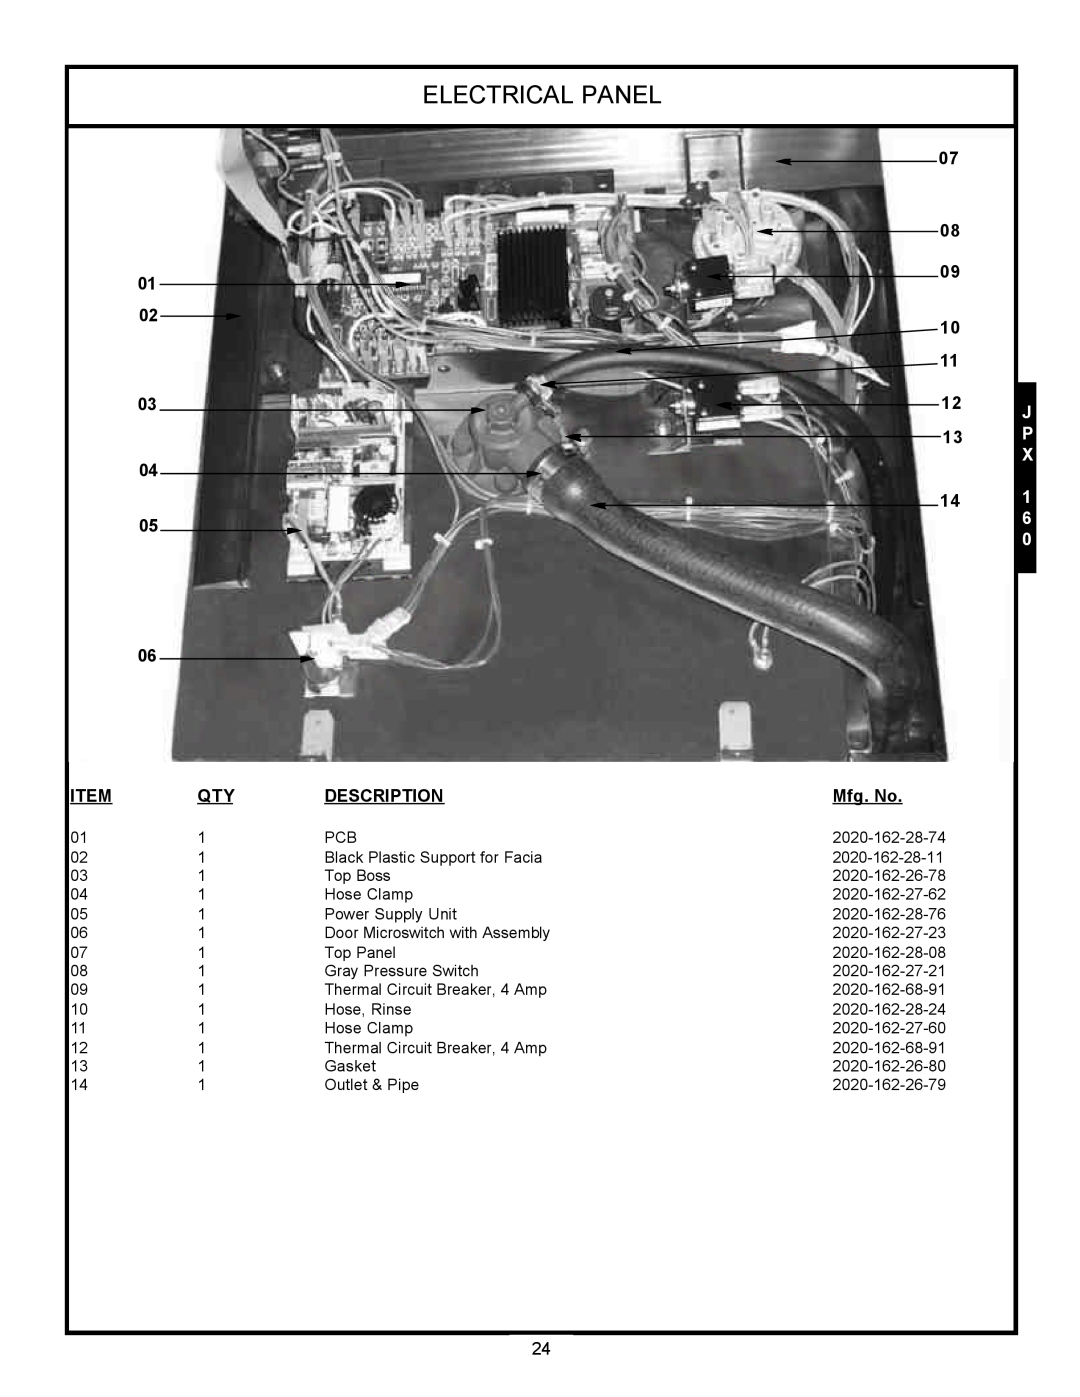 Jackson JPX-200, JPX-160, jpx-140 service manual Electrical Panel, Description, Mfg. No 